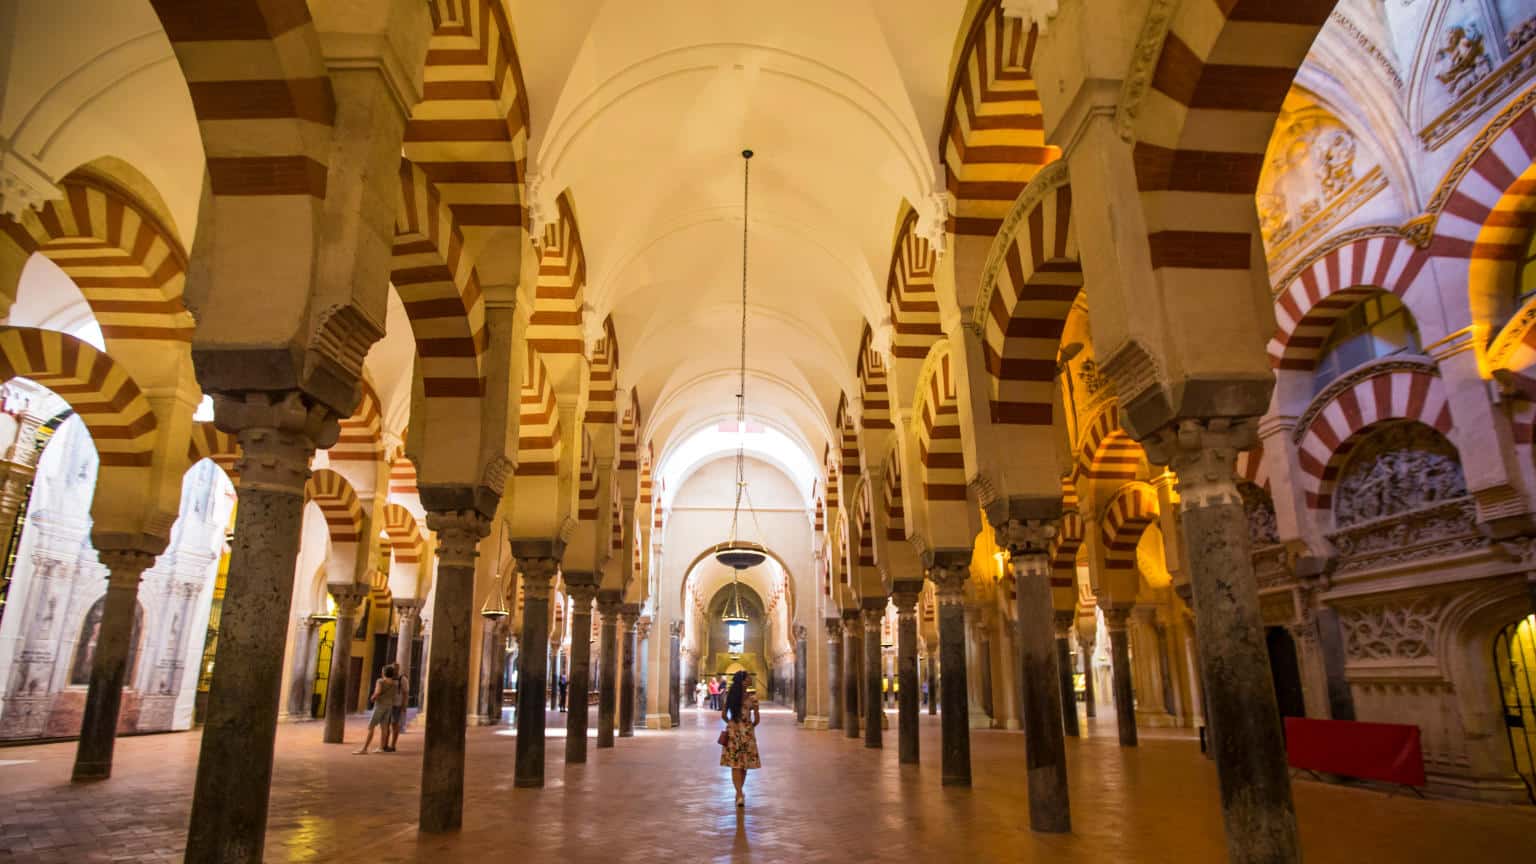 Spain-Cordoba-Mosque-Interior-Pillars